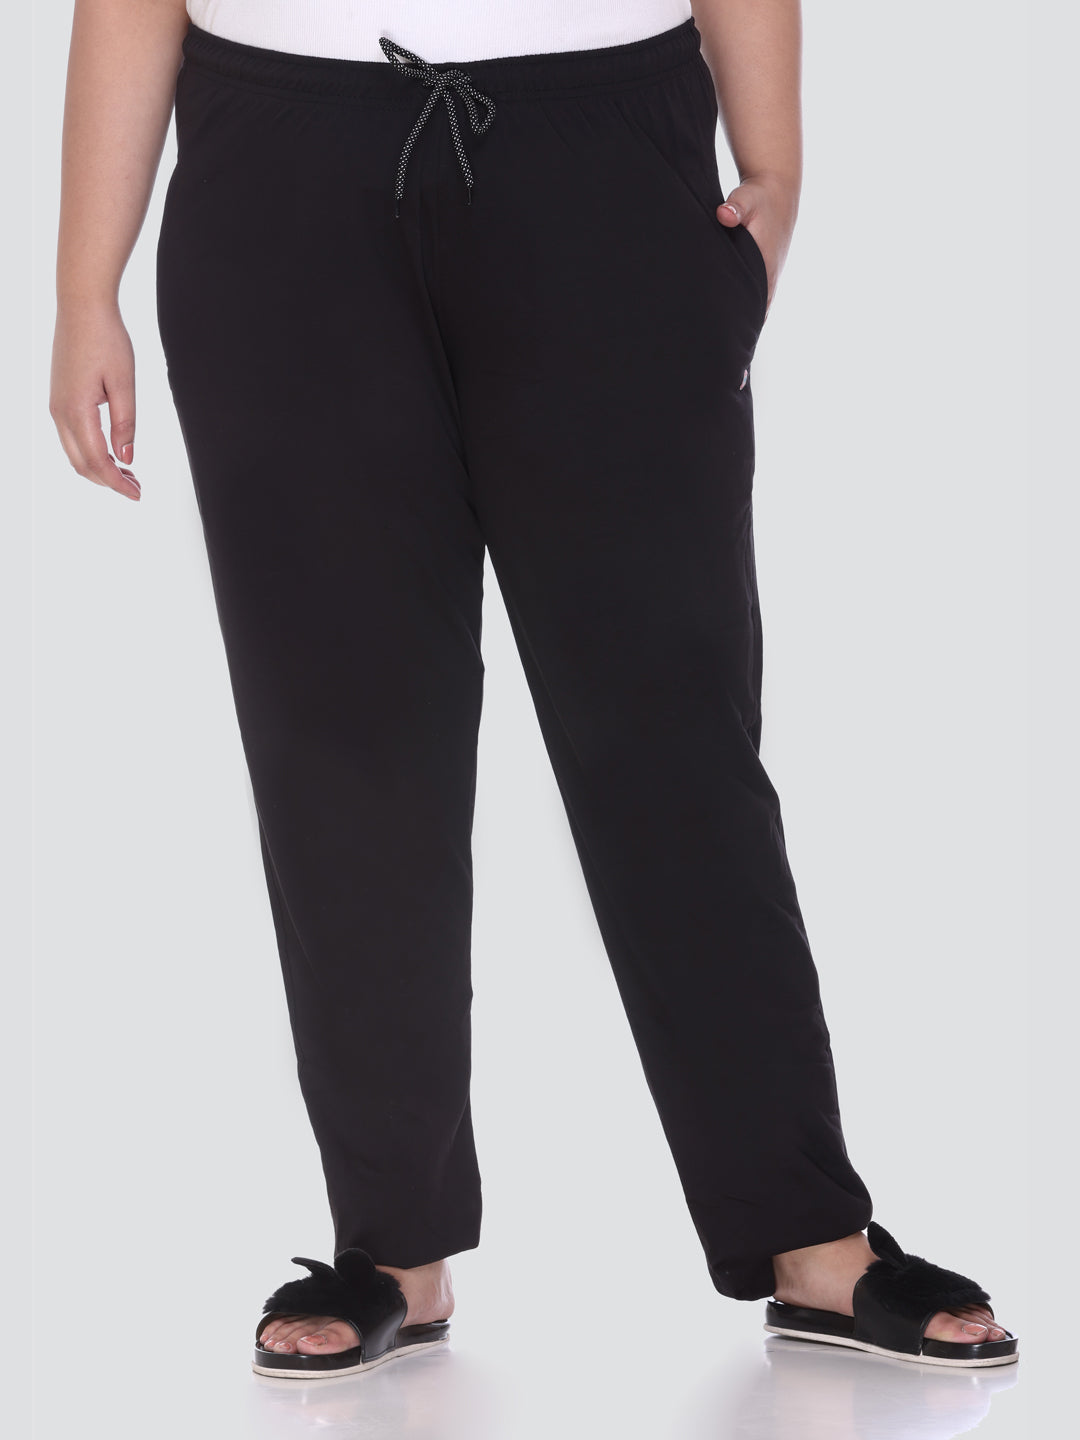 Buy Women Green Regular Fit Solid Casual Track Pants Online  609555   Allen Solly